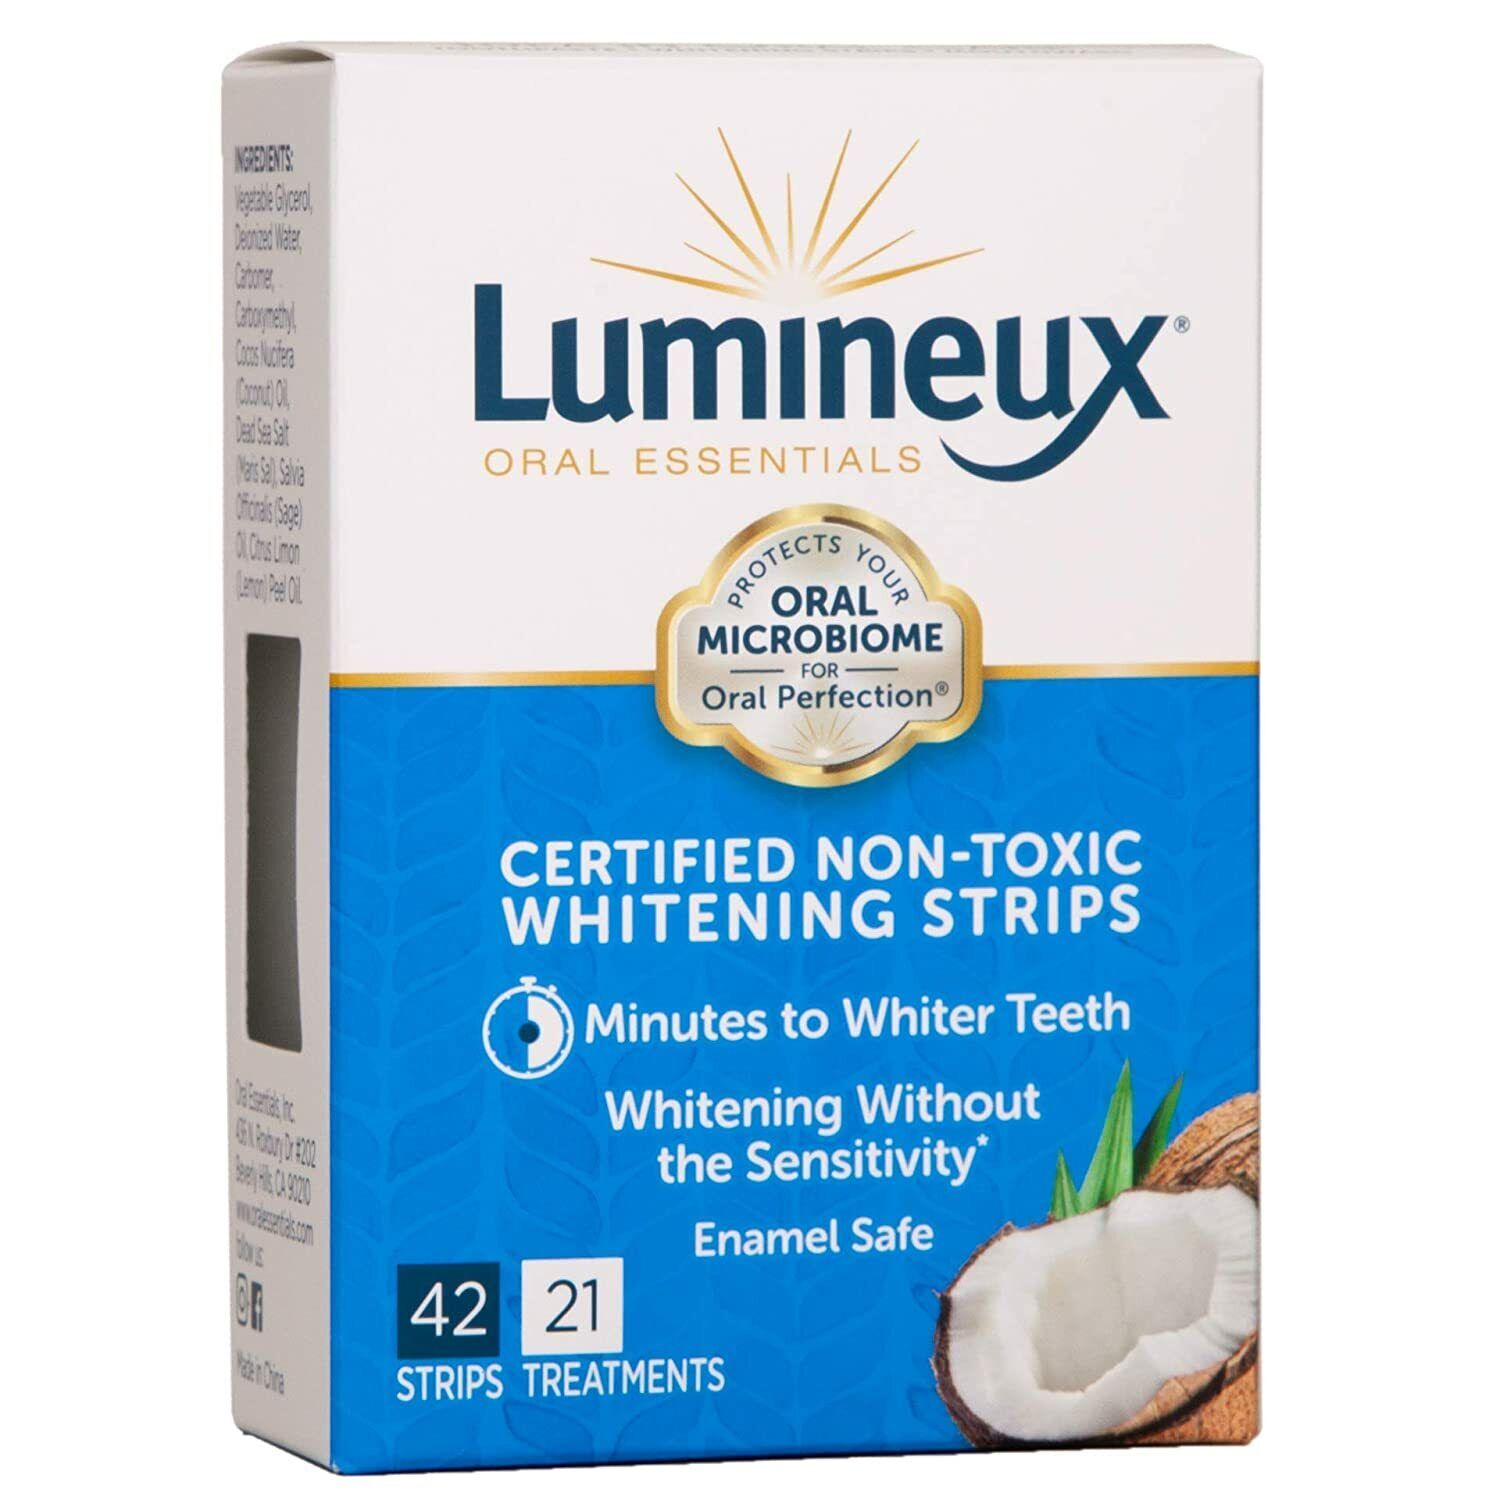 Lumineux Oral Essentials Teeth Whitening Strips (42 Strips, 21 Treatments) Laagste prijs, hoge kwaliteit